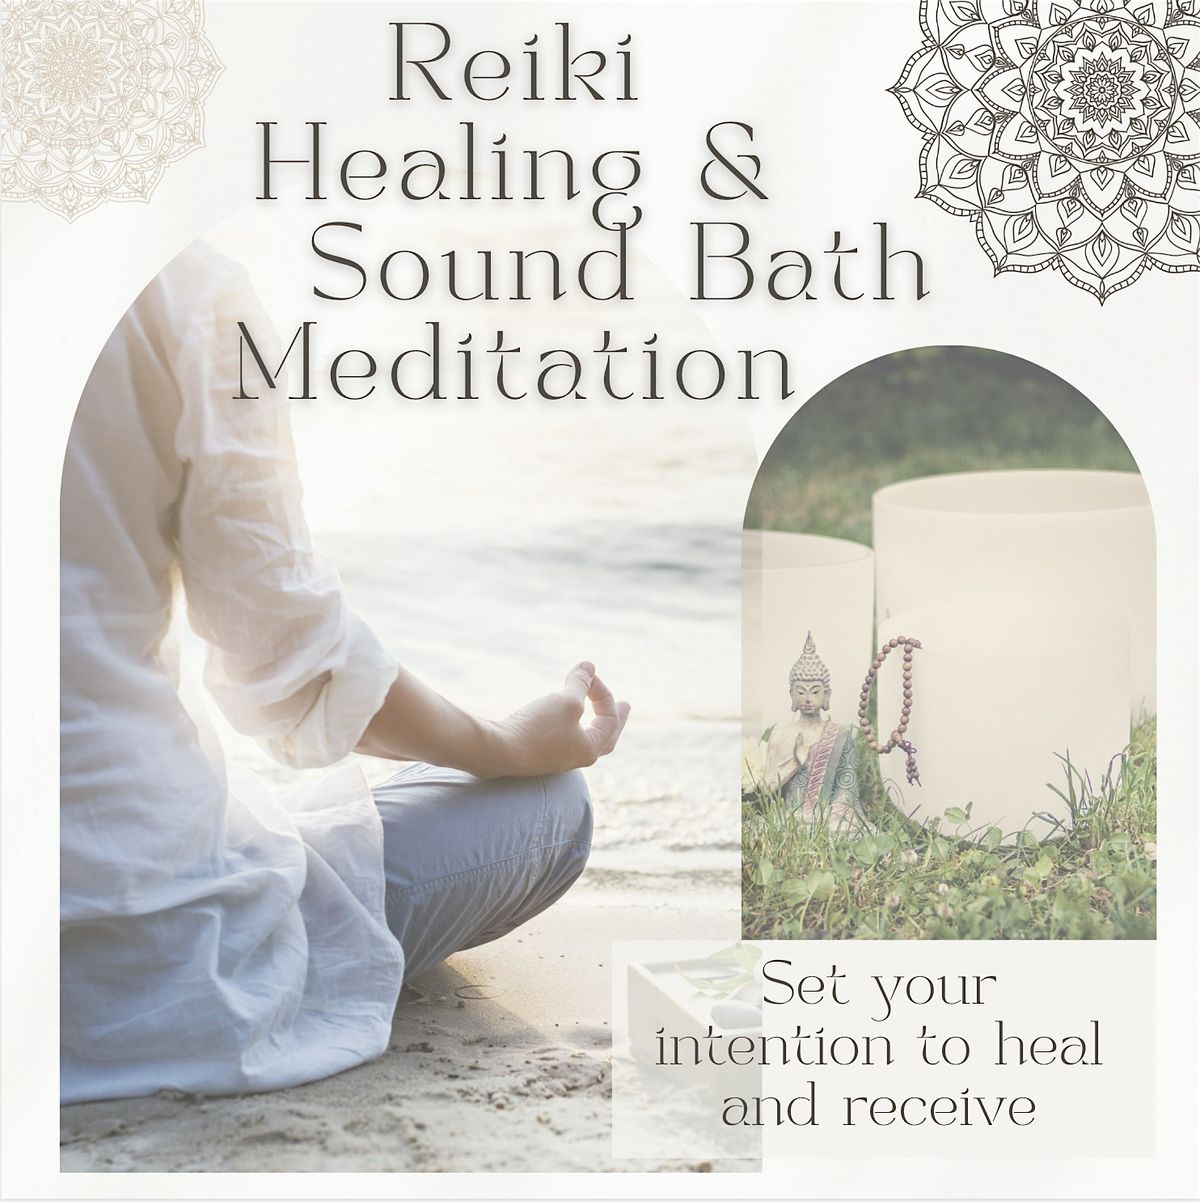 The Reiki Healing and Sound Bath Meditation